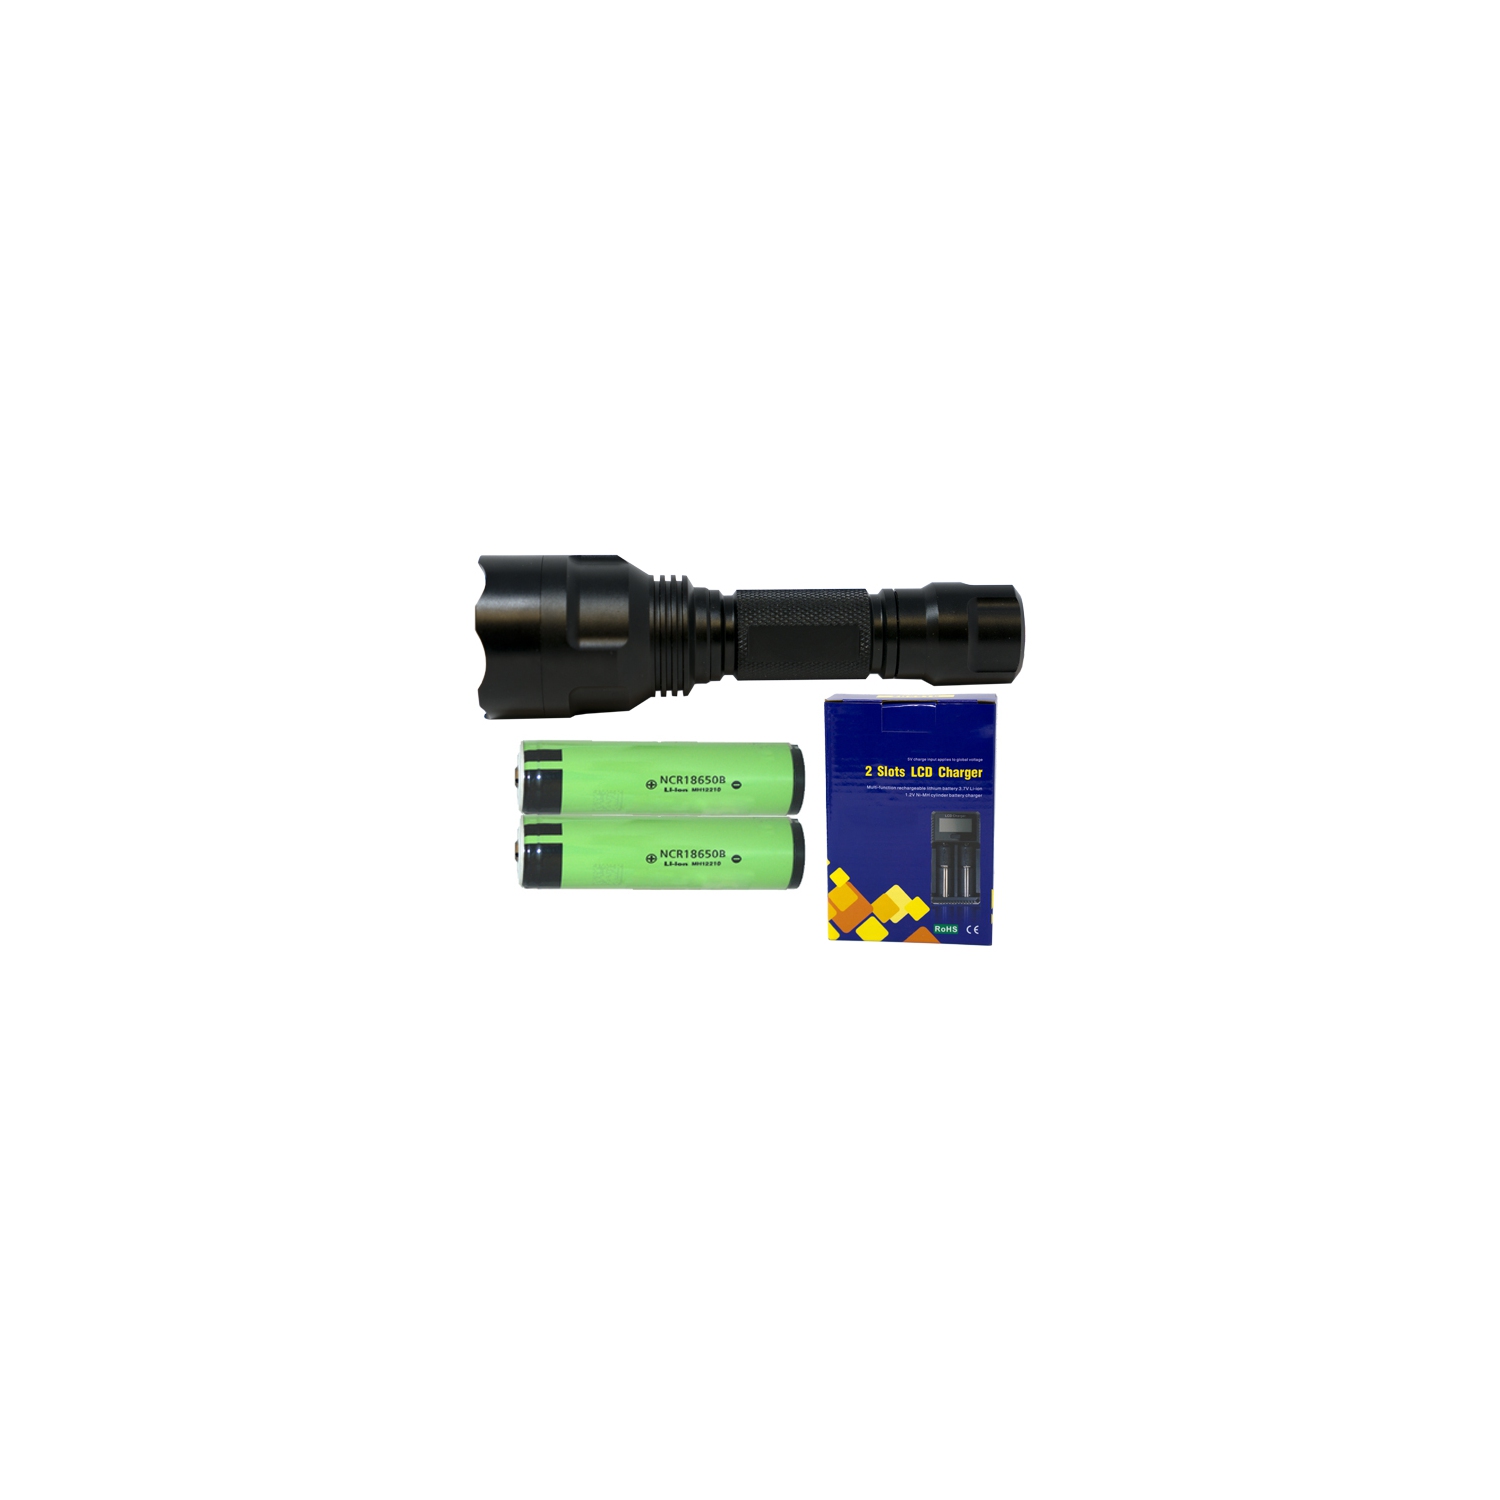 2-Slot Fast Battery Charger + 2 x 3.7 Volt Panasonic 18650 Lithium Ion Button Top Batteries (3400 mAh)